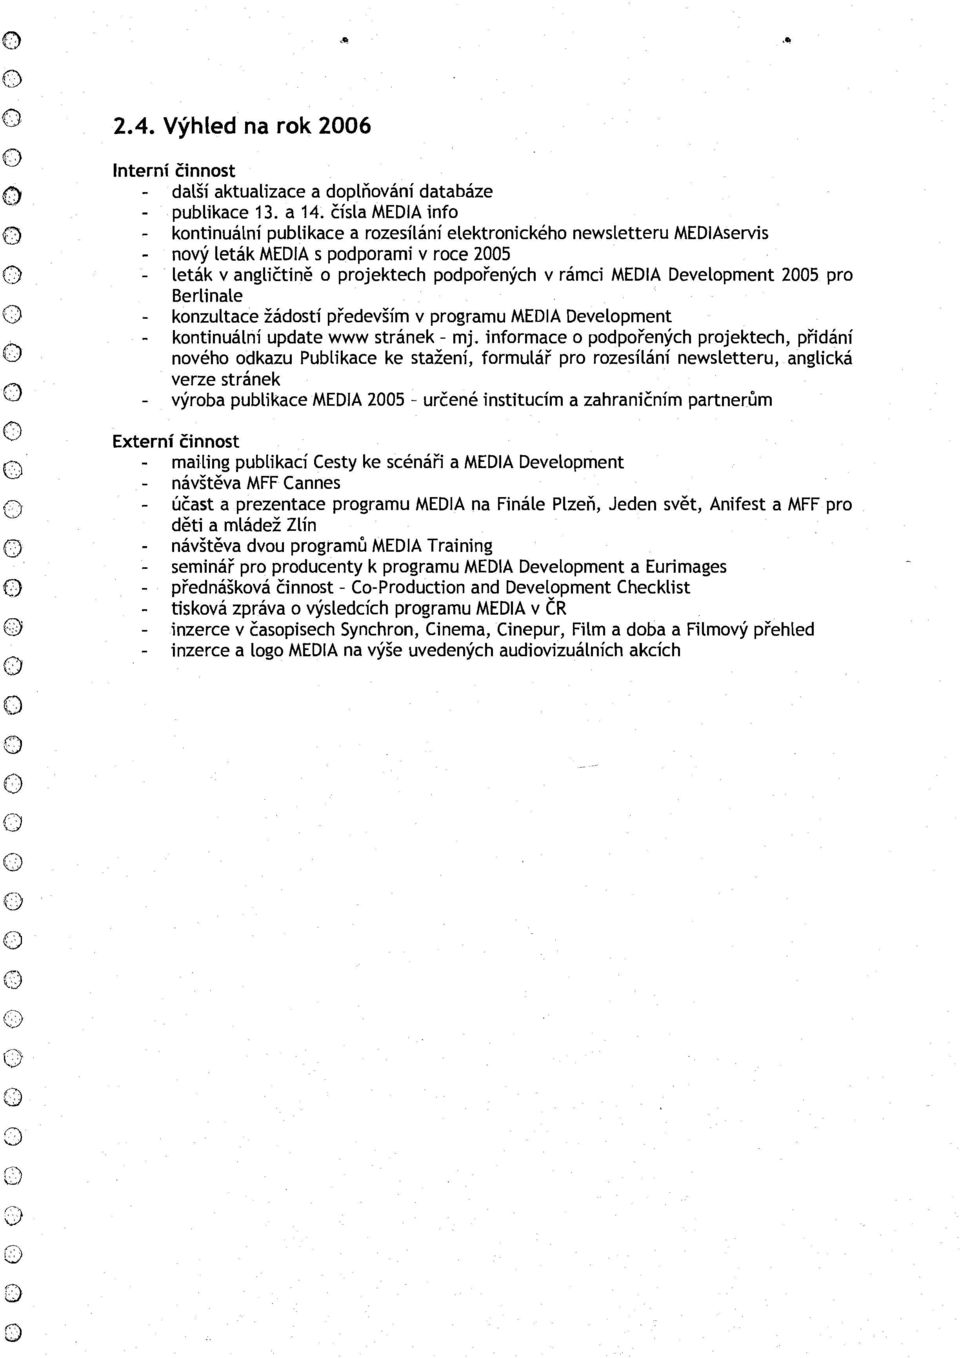 Development 25 pro Berlinale - konzultace Zadosti pr'edev5im v programu MEDlA Development - kontinualni update www stranek - mj.